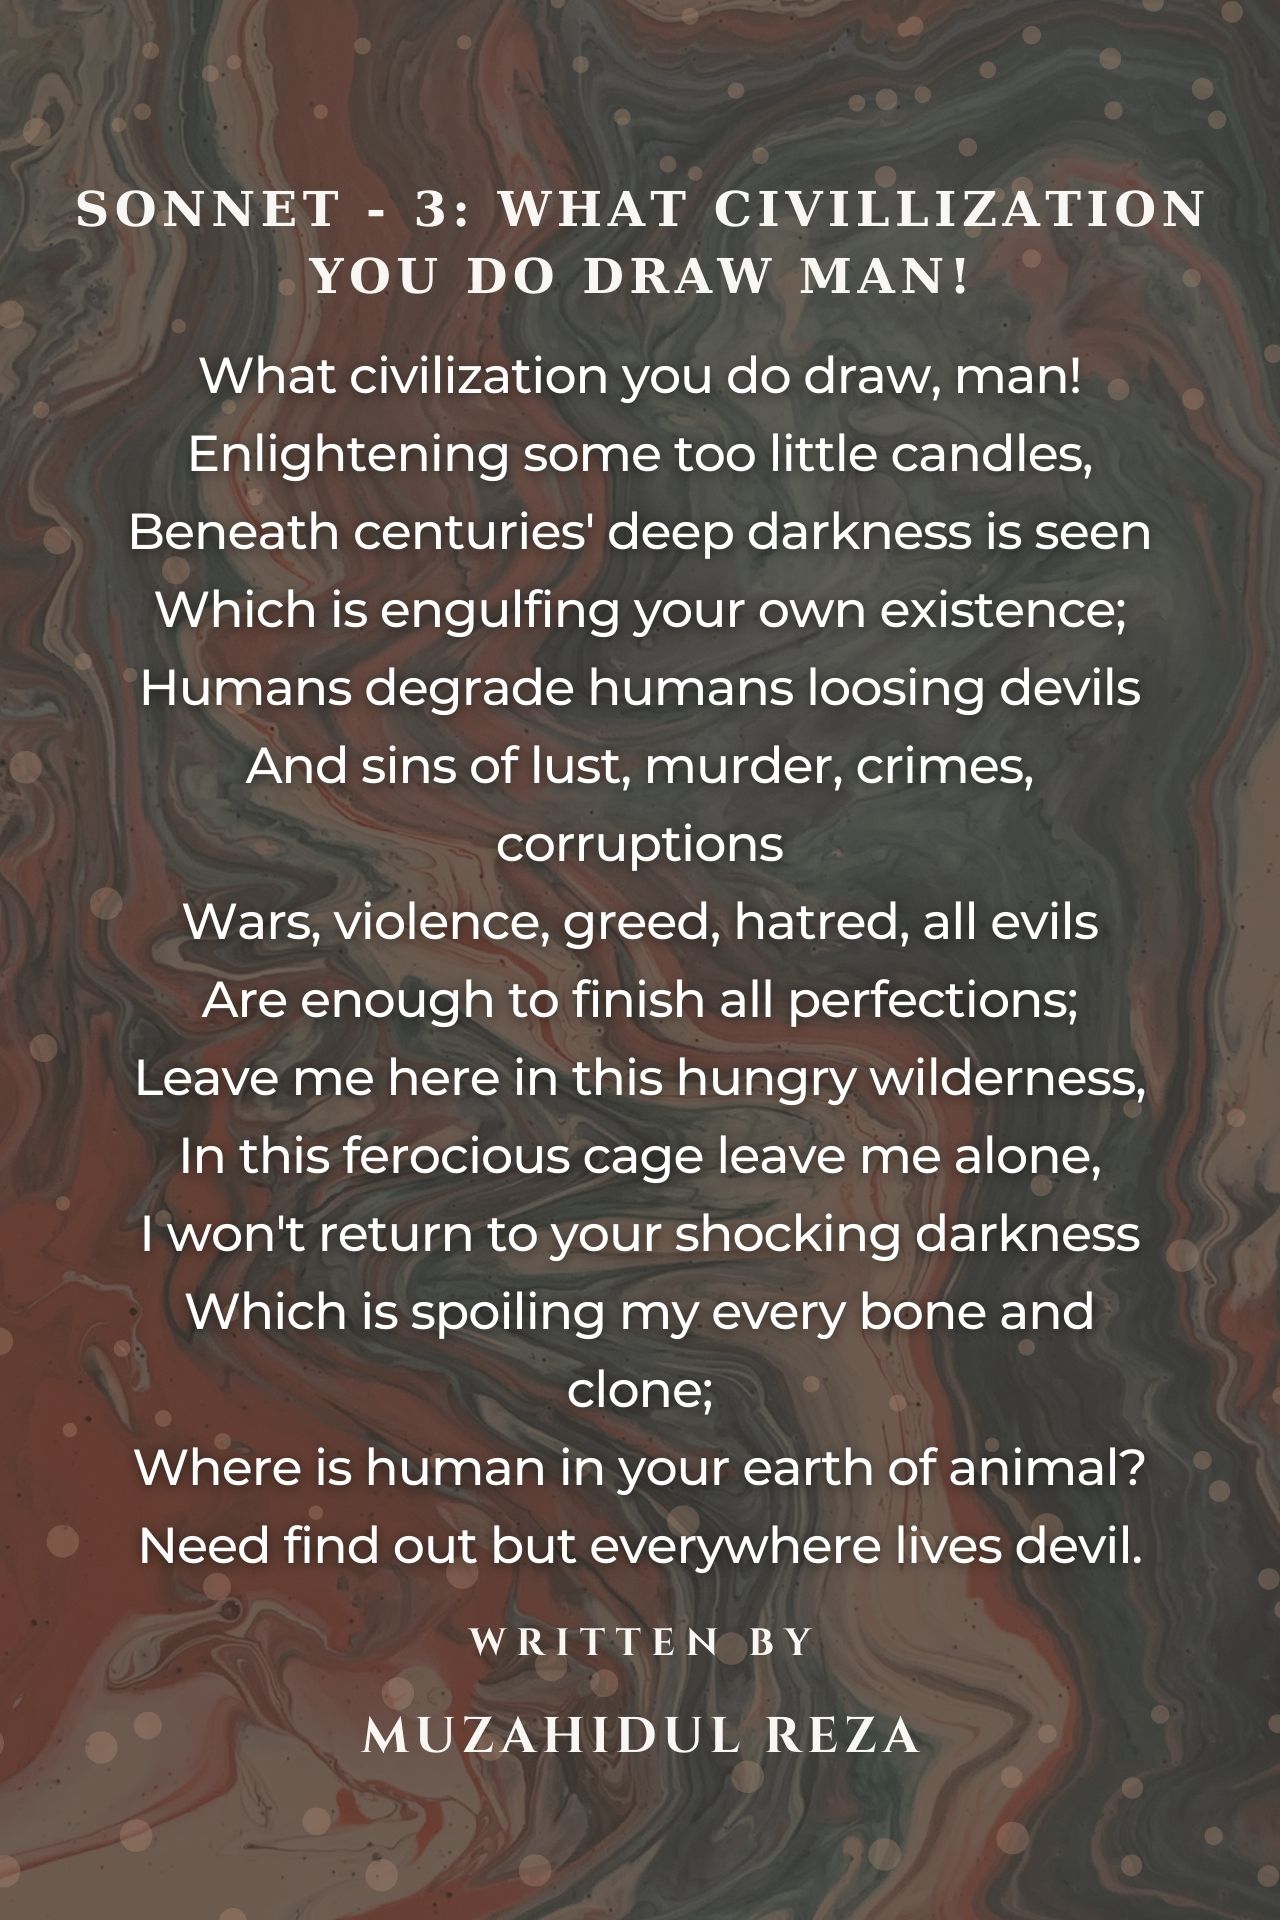 Sonnet - 3: What Civilization You Do Draw Man!